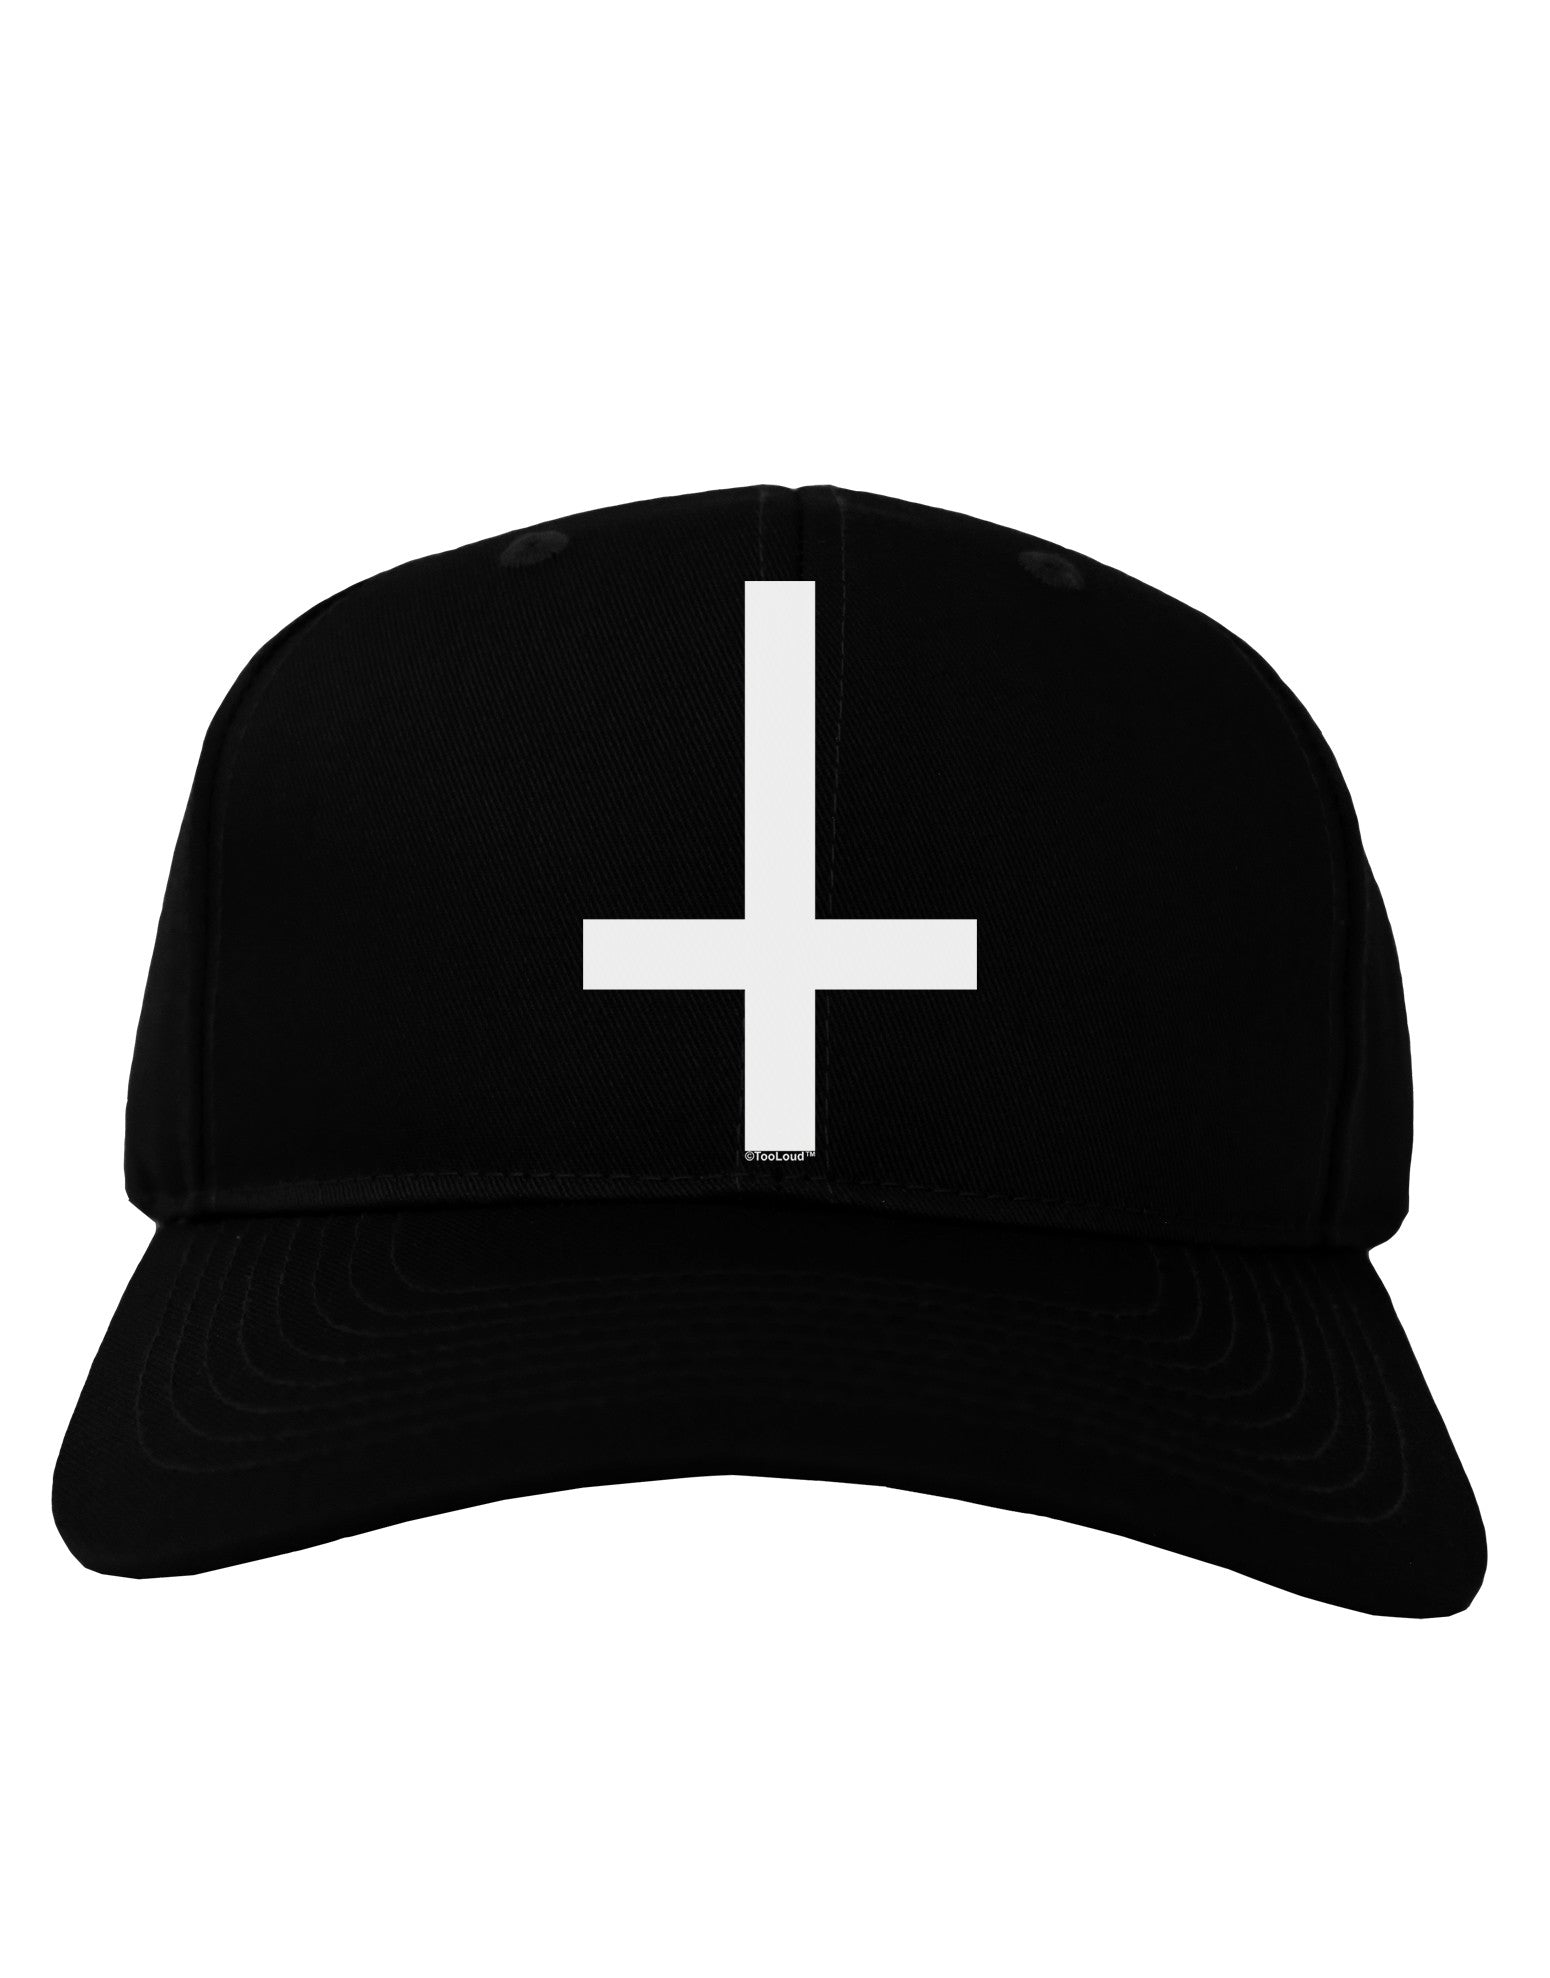 Inverted Cross Adult Dark Baseball Cap Hat - Davson Sales